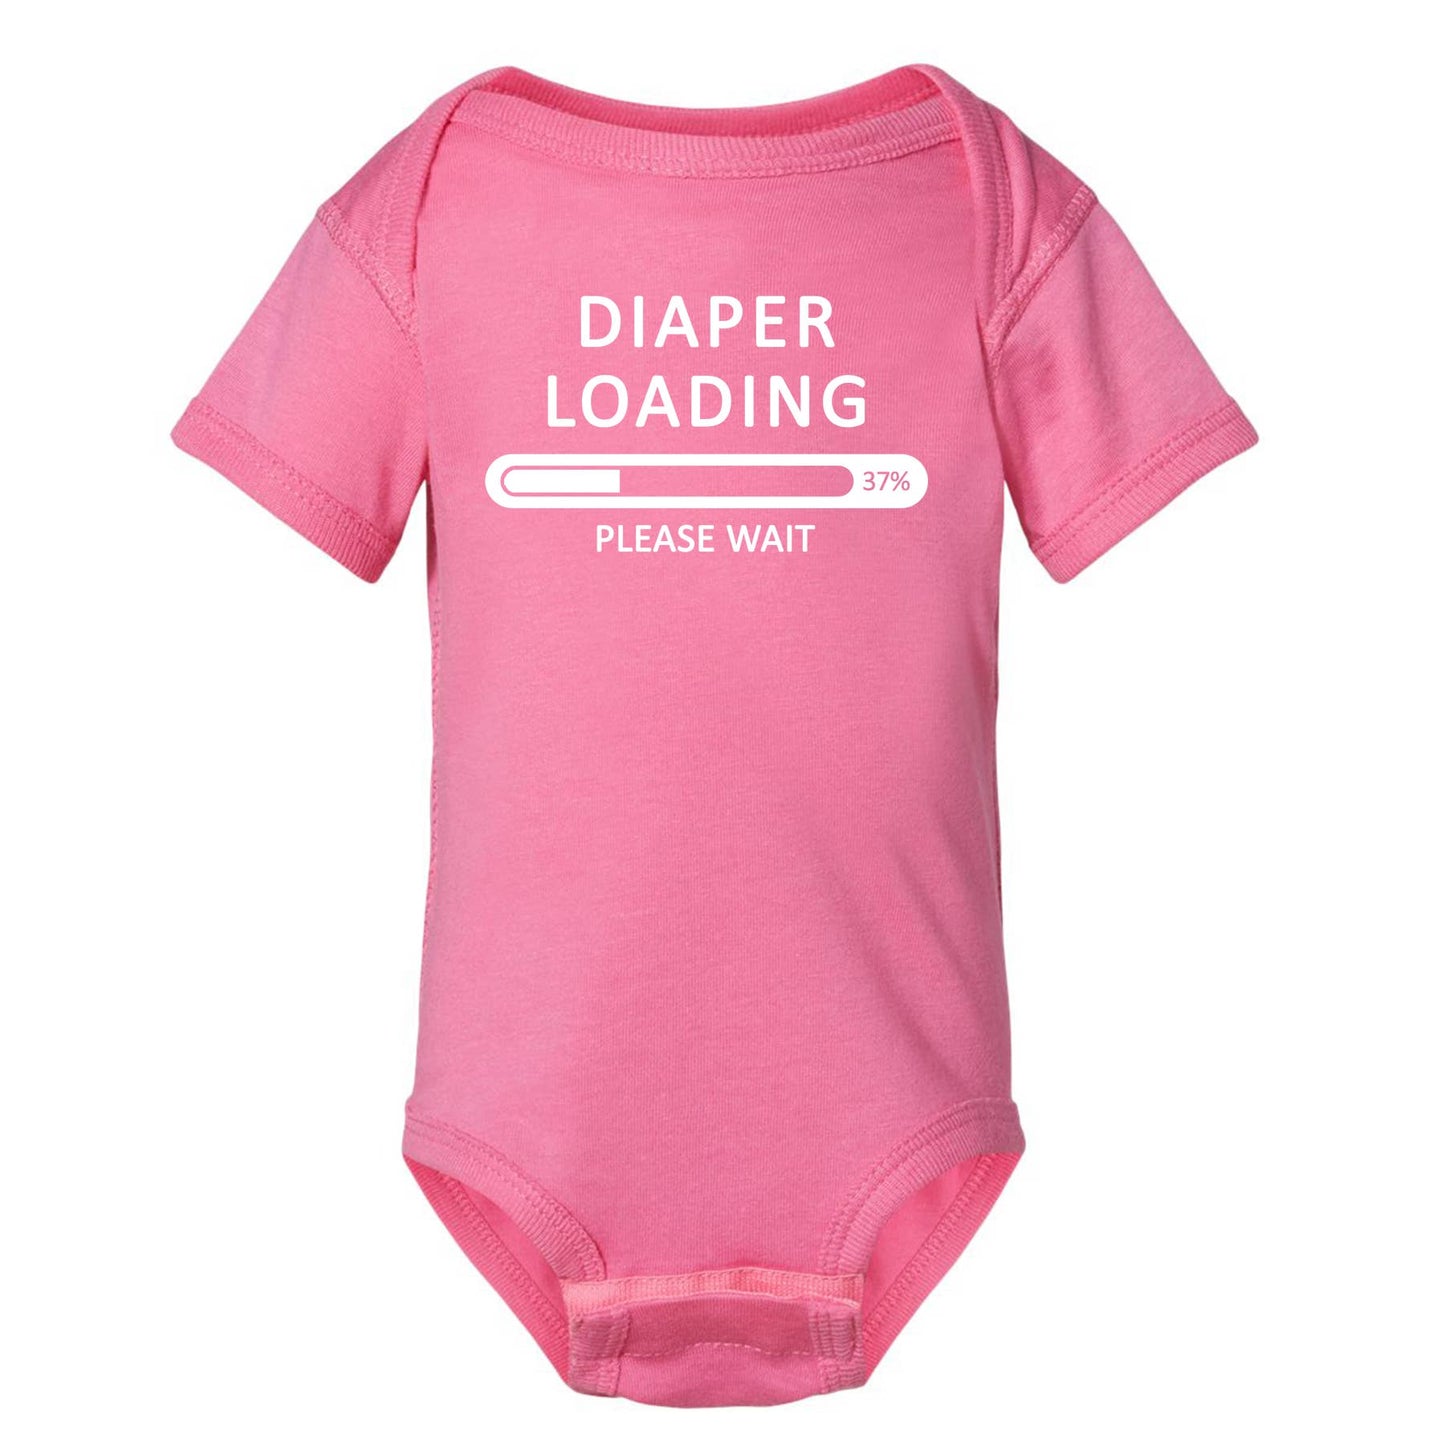 Diaper Loading Please Wait Baby/Toddler Onesie